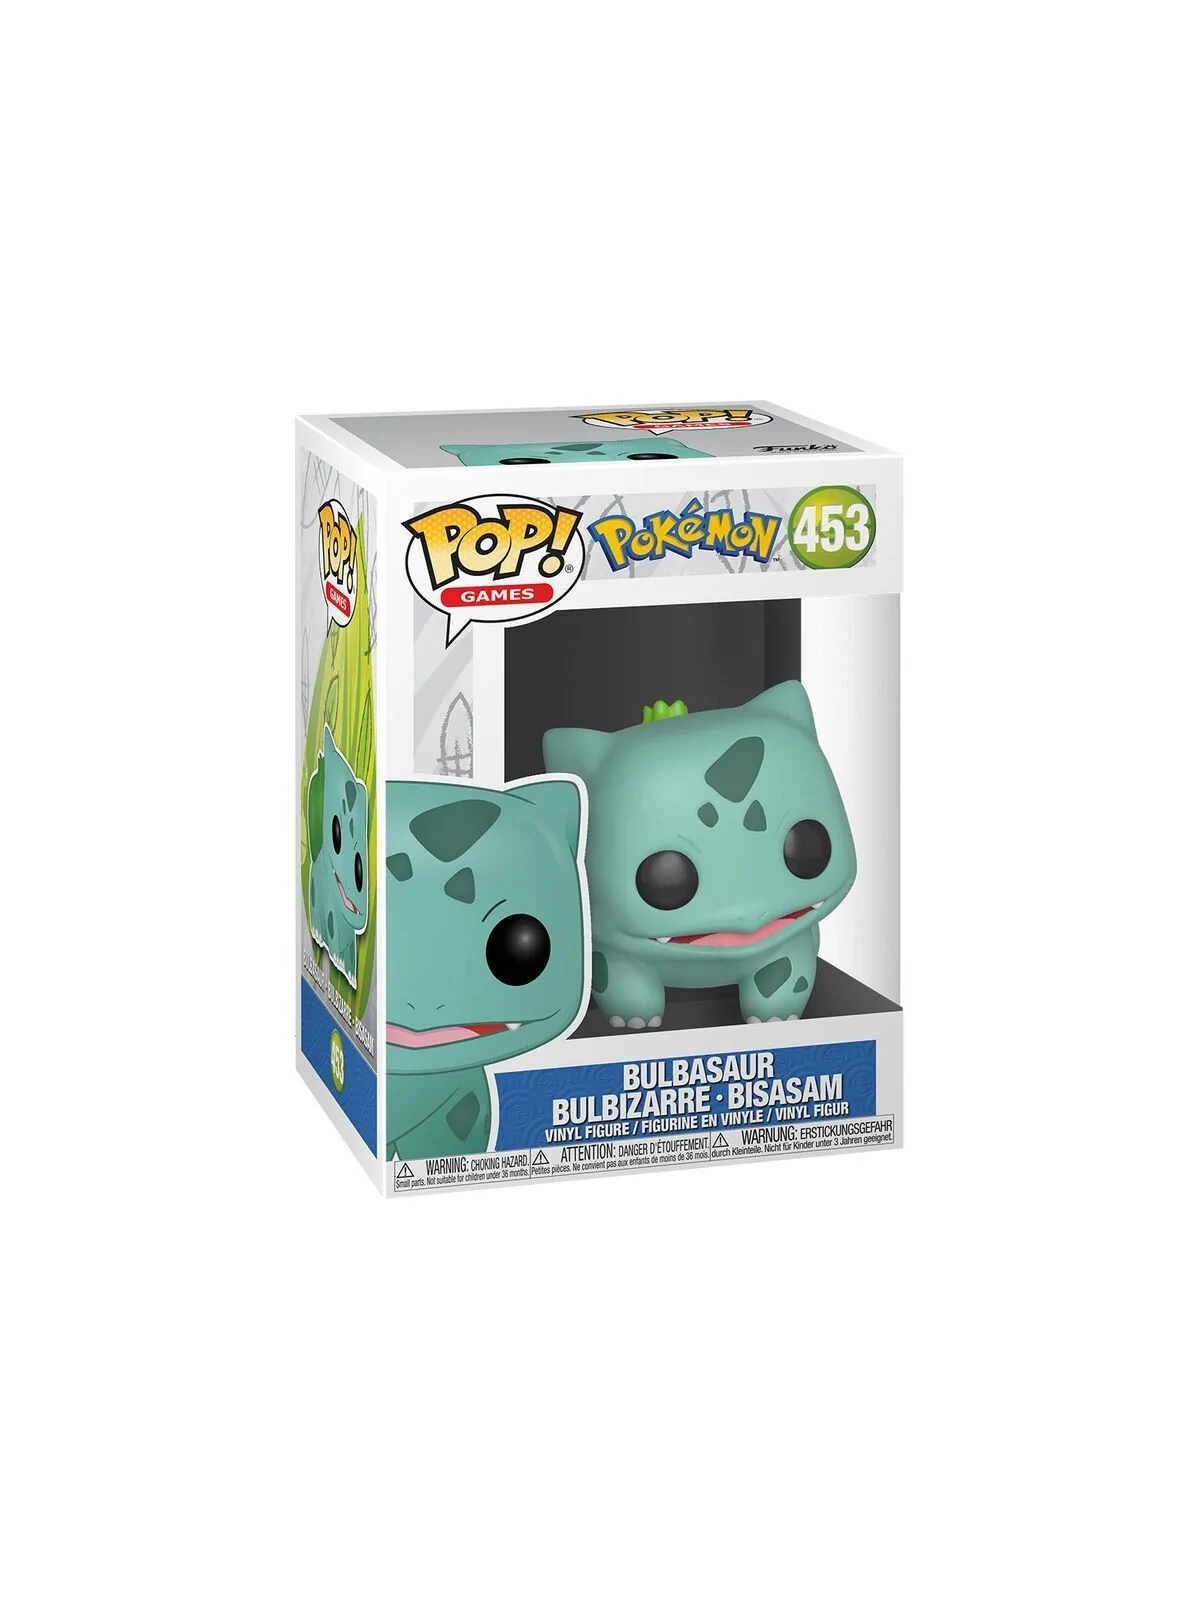 Comprar Funko POP! Pokemon: Bulbasaur (453) barato al mejor precio 17,